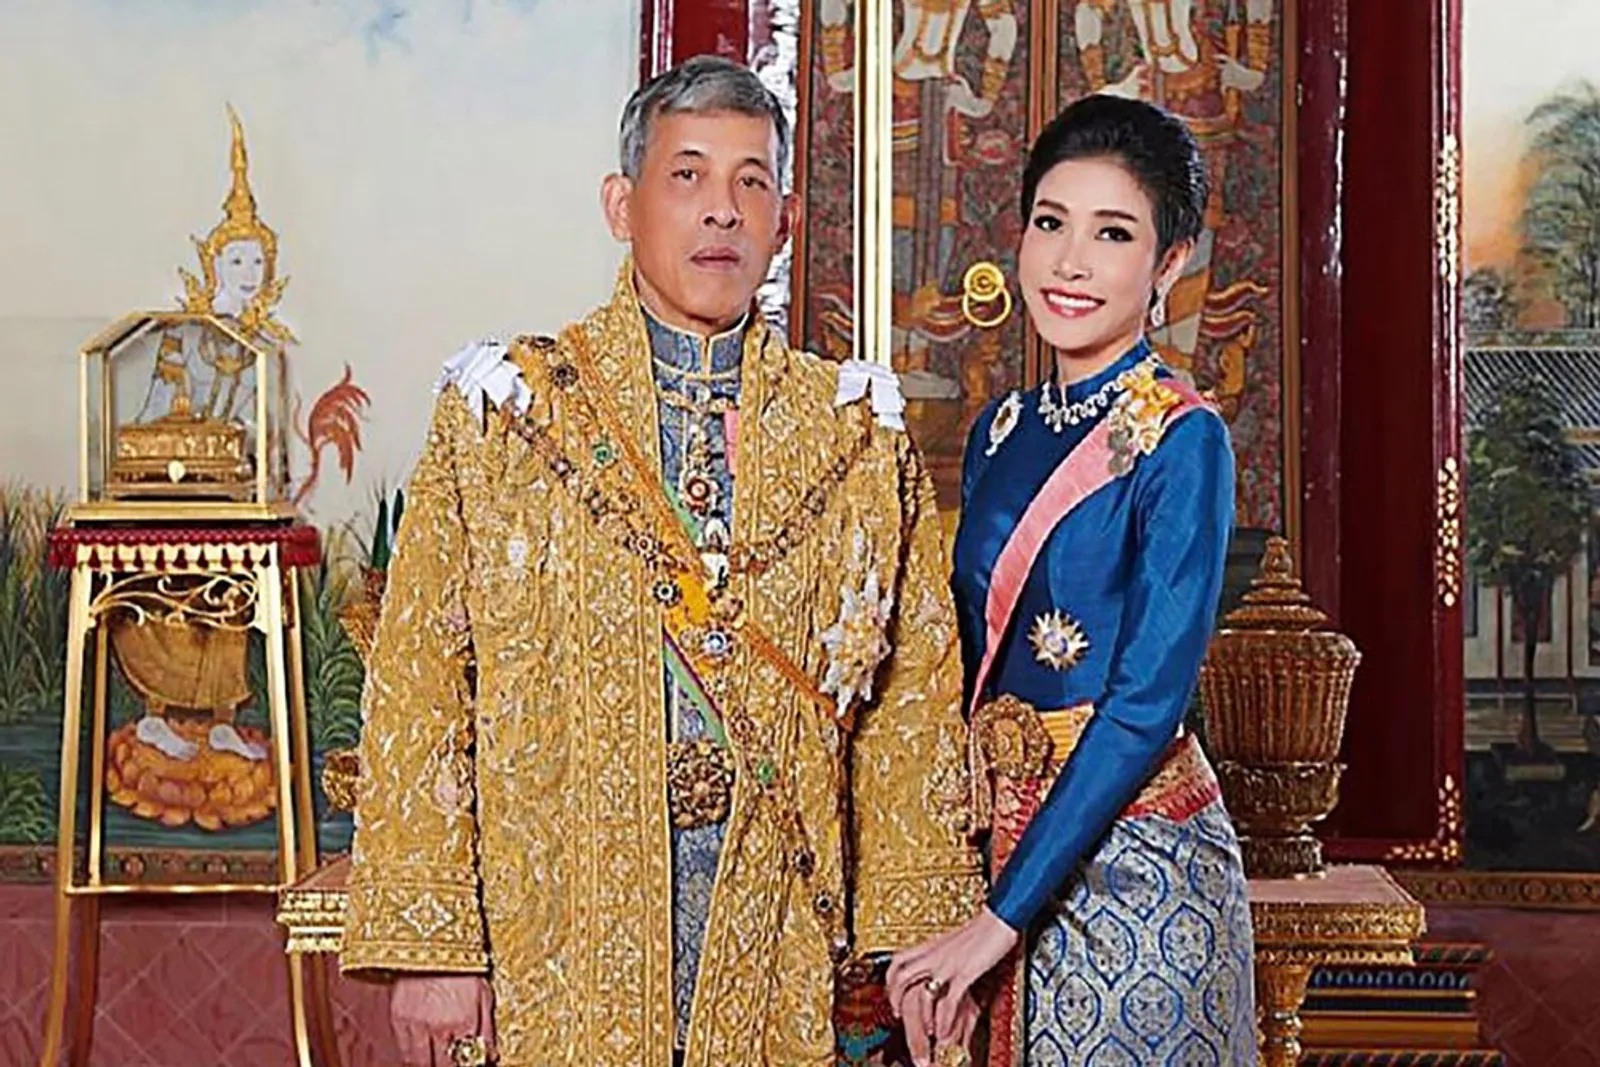 Tersebar Foto Syur di Internet, Begini Gaya Asli Selir Raja Thailand